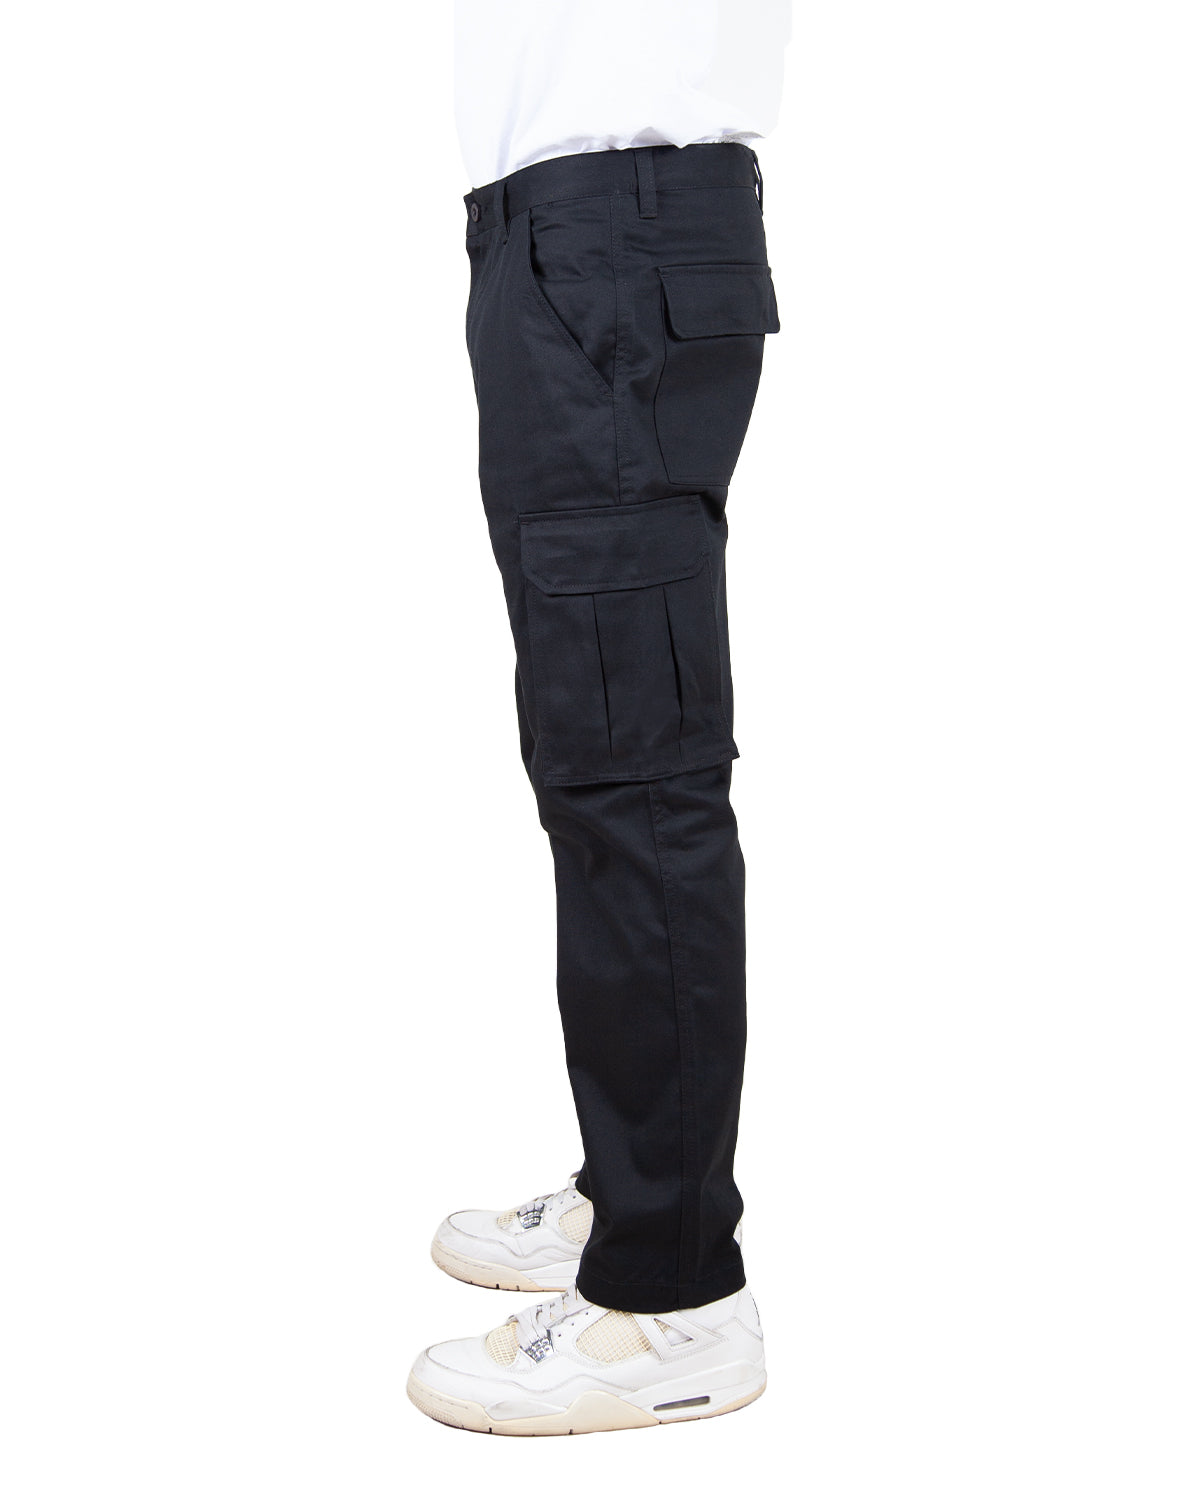 Buy Online Mens Black 7 Pocket Twill Cargo Pants at Zobello